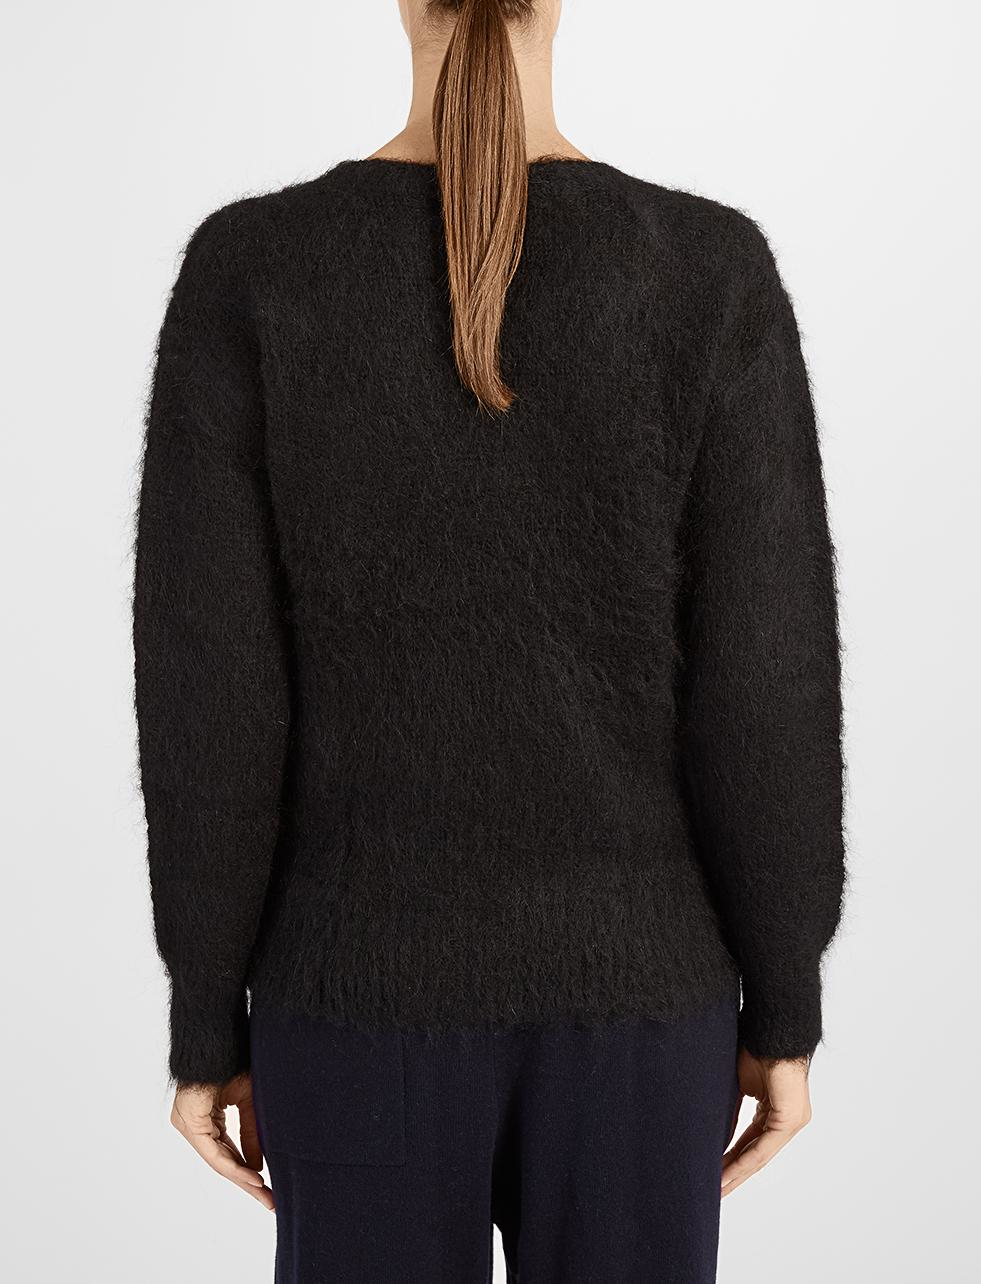 JOSEPH Wool Mohair Knit V Neck Sweater in Black - Lyst